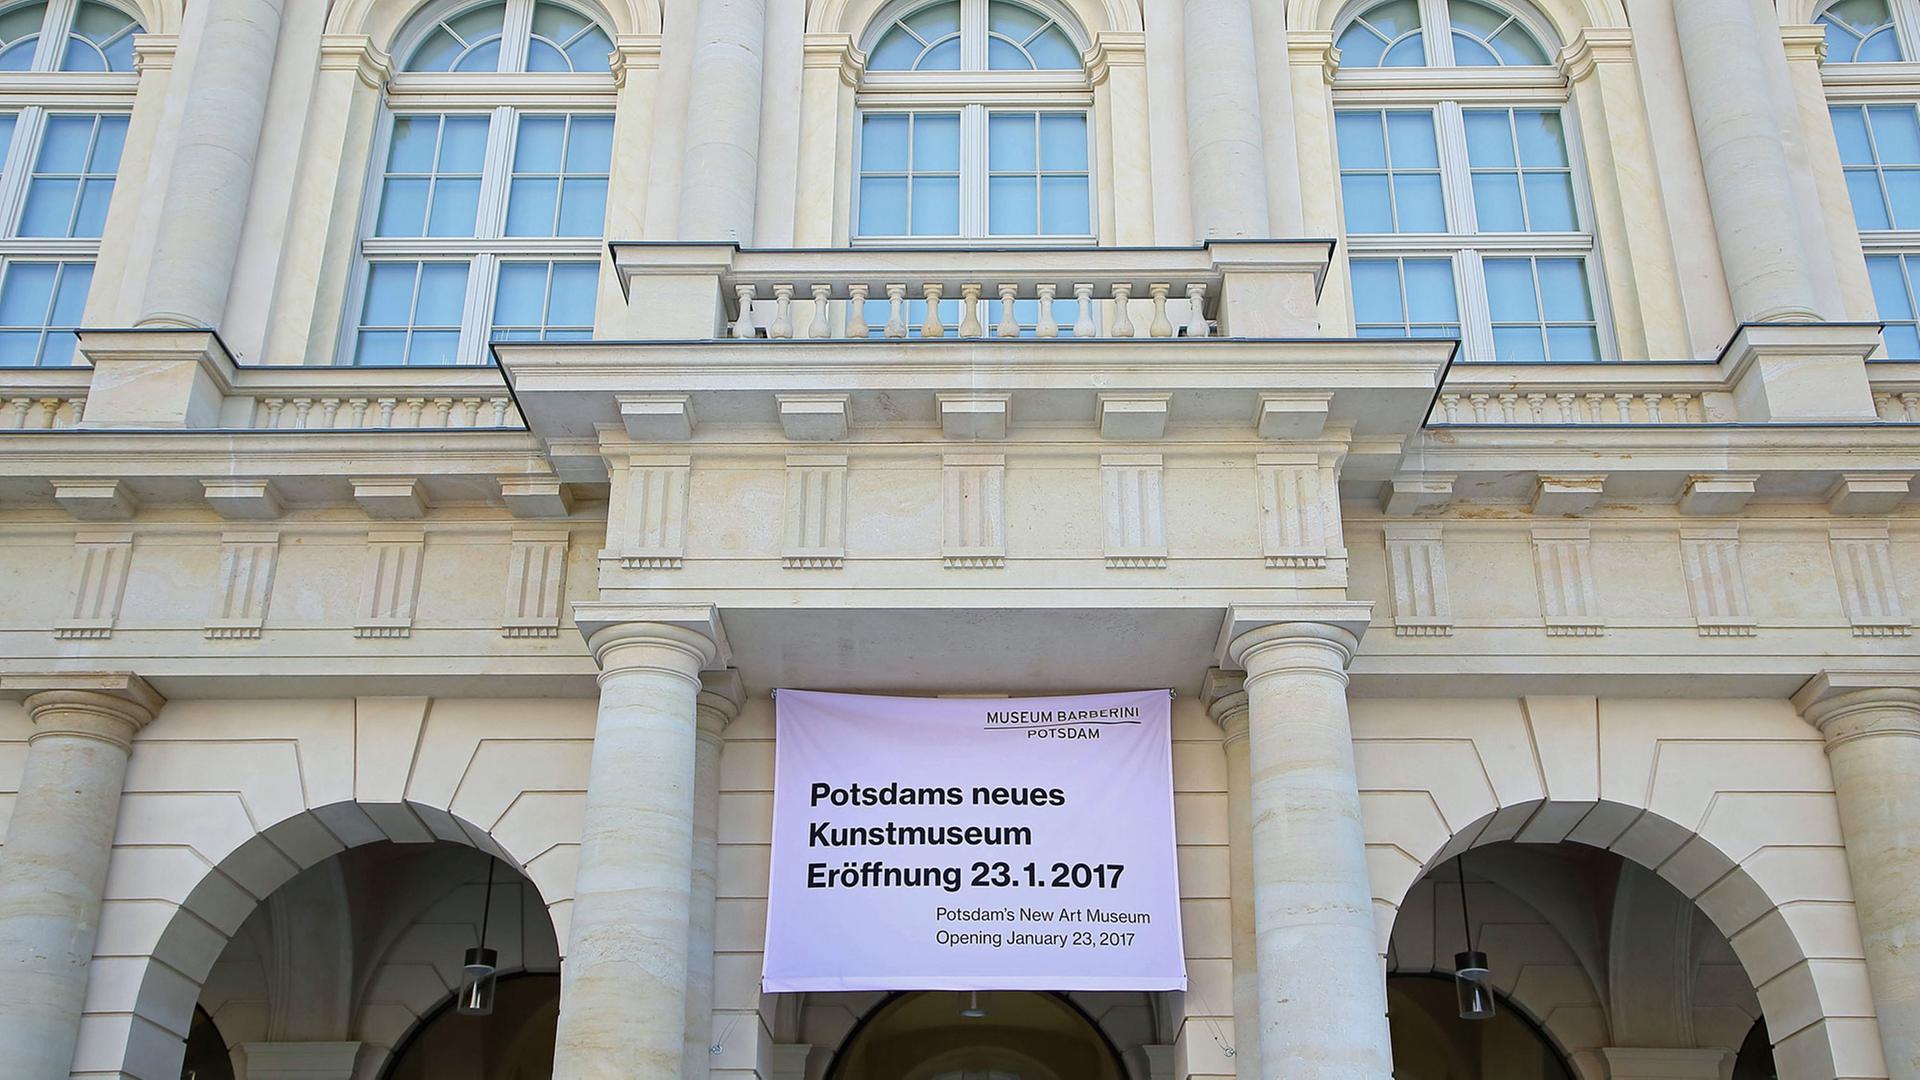 Fassade am Palast Barberini in Potsdam, aufgenommen 10. Januar 2017. Das Museum Barberini öffnet am 23. Januar 2017.